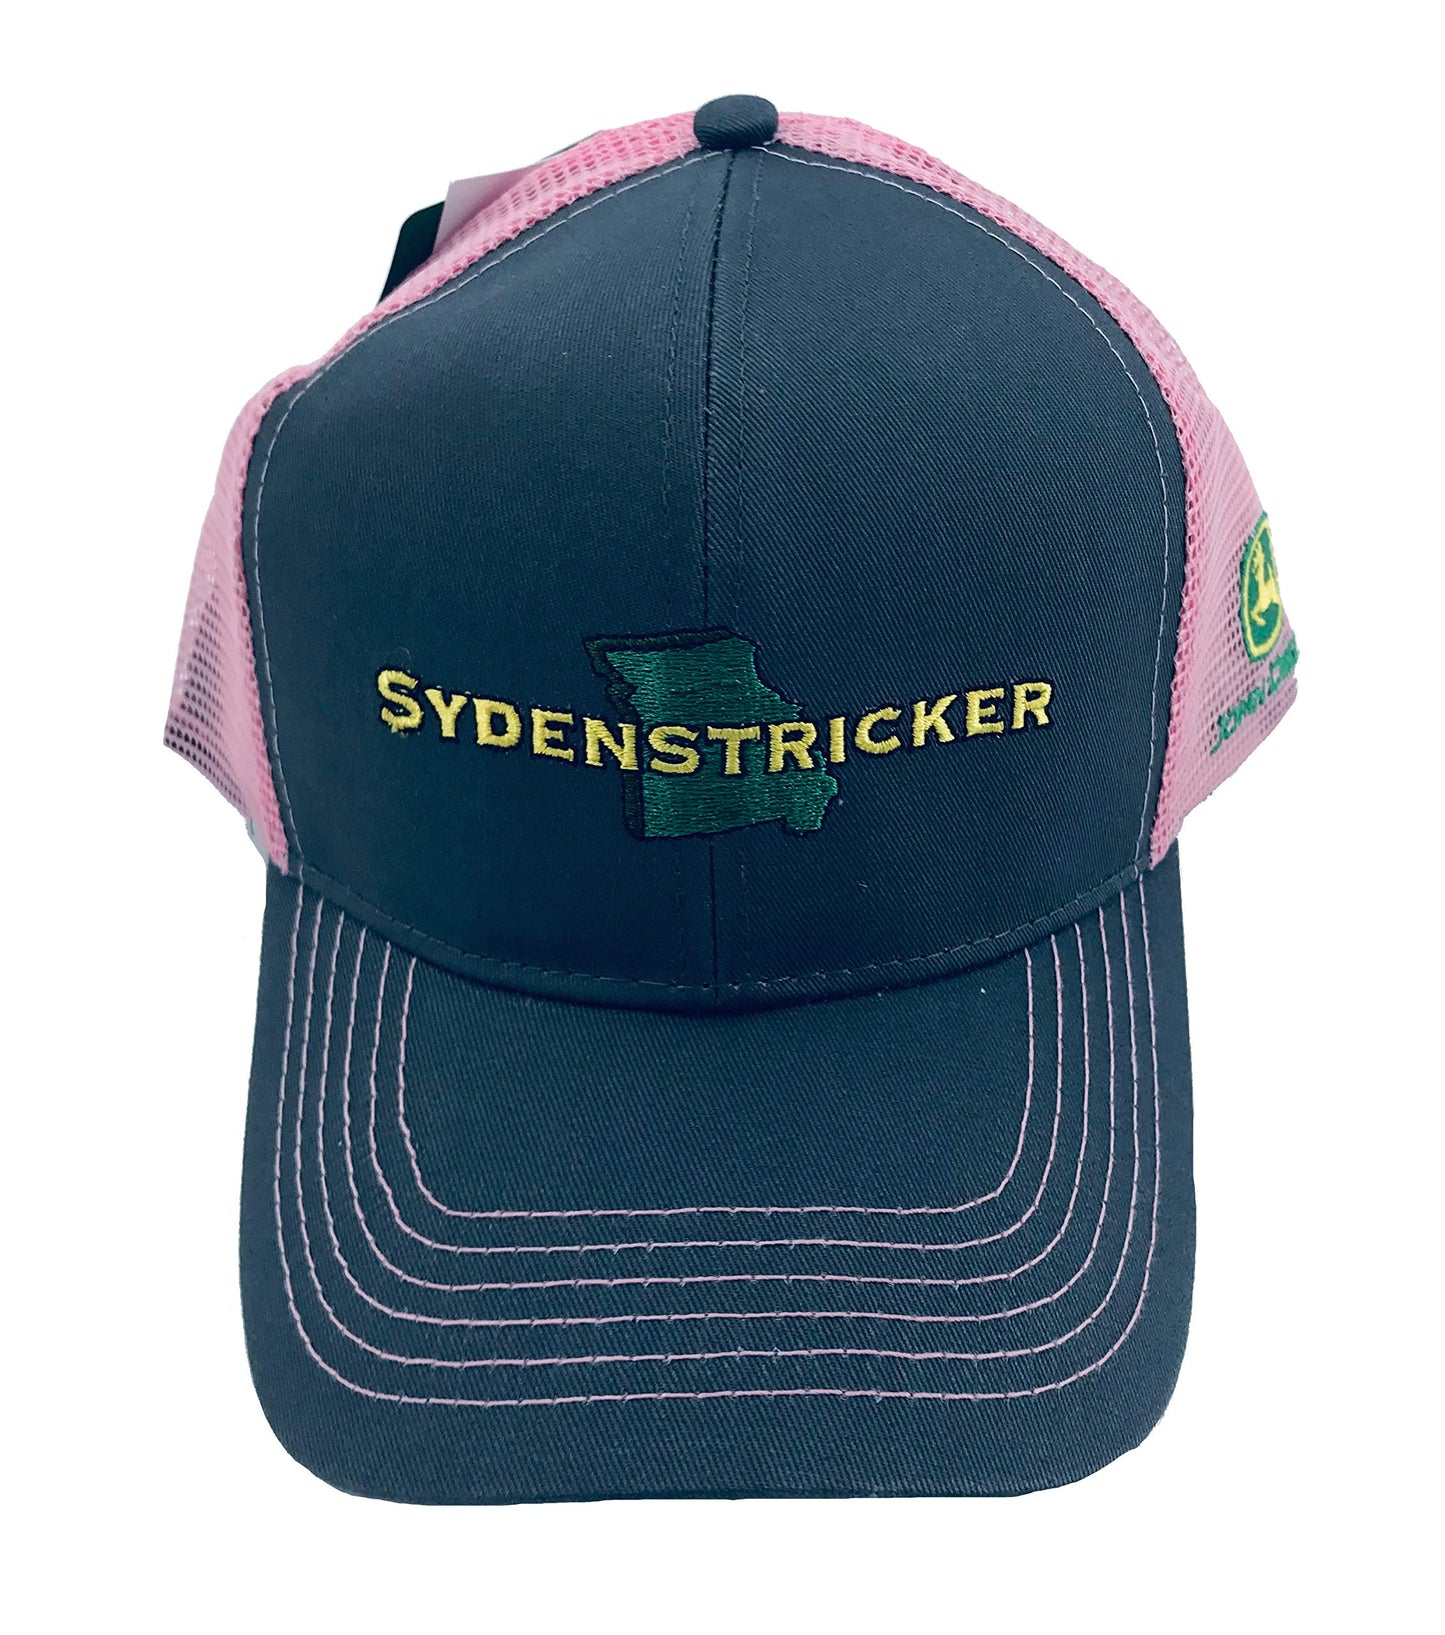 John Deere"Sydenstricker" Gray and Pink Hat/Cap - LP70150